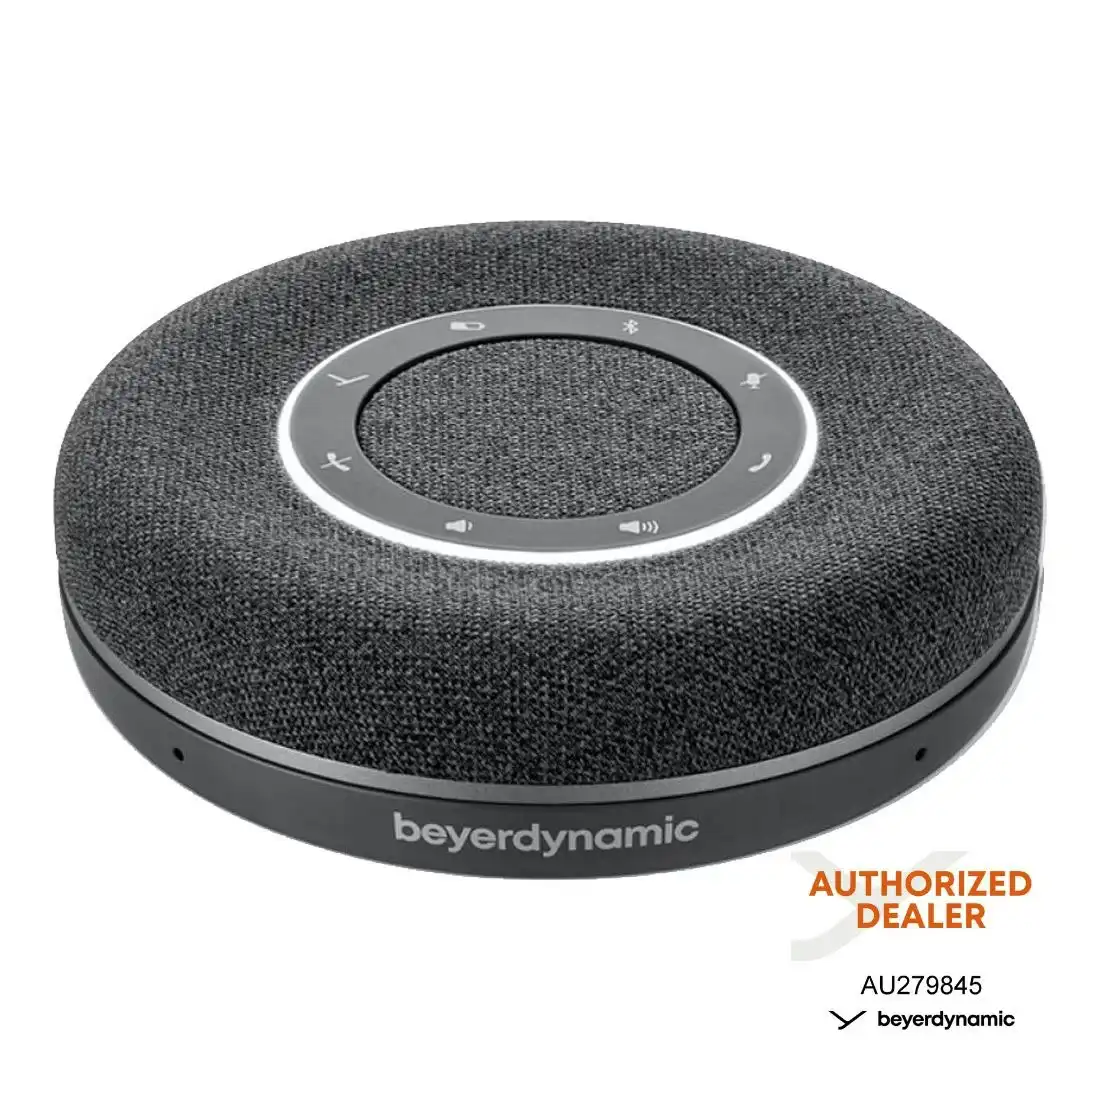 Beyerdynamic Space Wireless Bluetooth Speakerphone - Charcoal